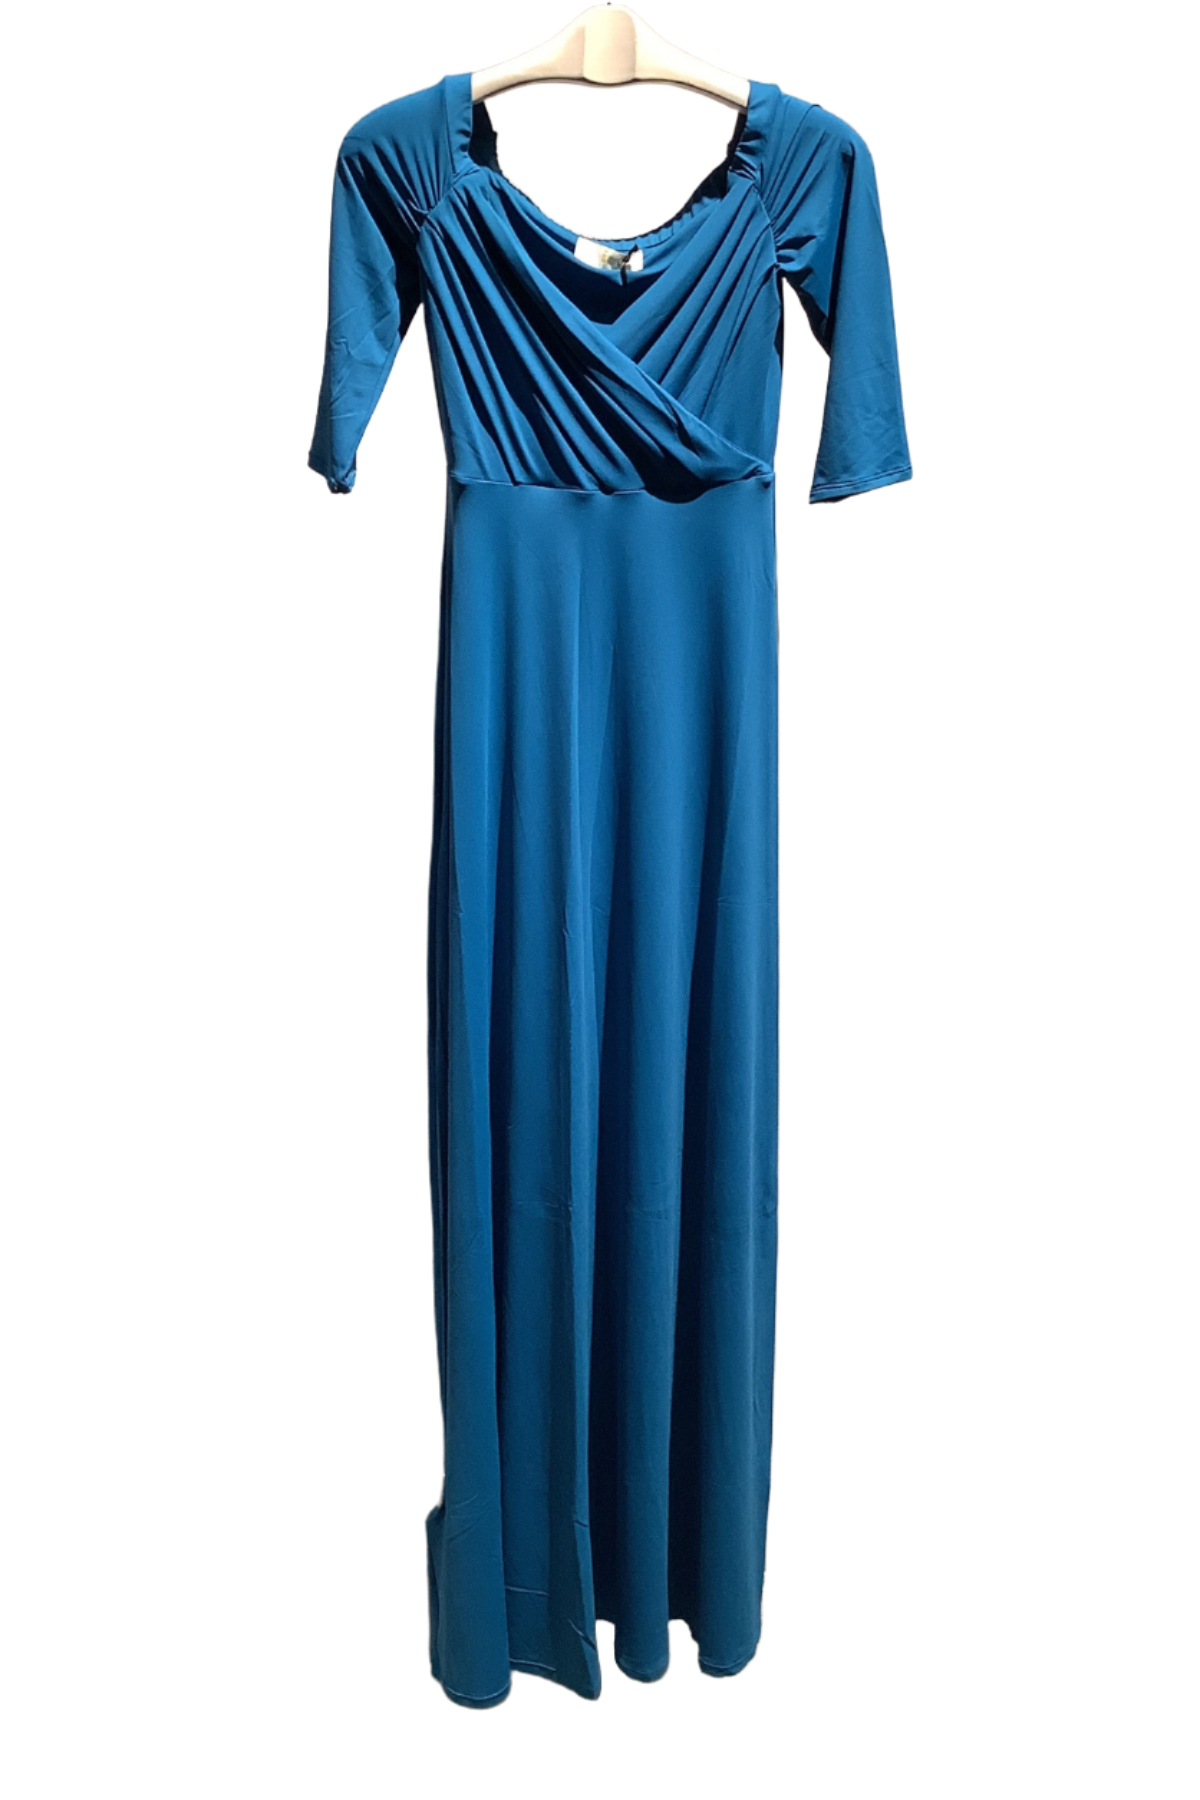 Rita Mennoia 3/4 Sleeve Maxi Dress Teal